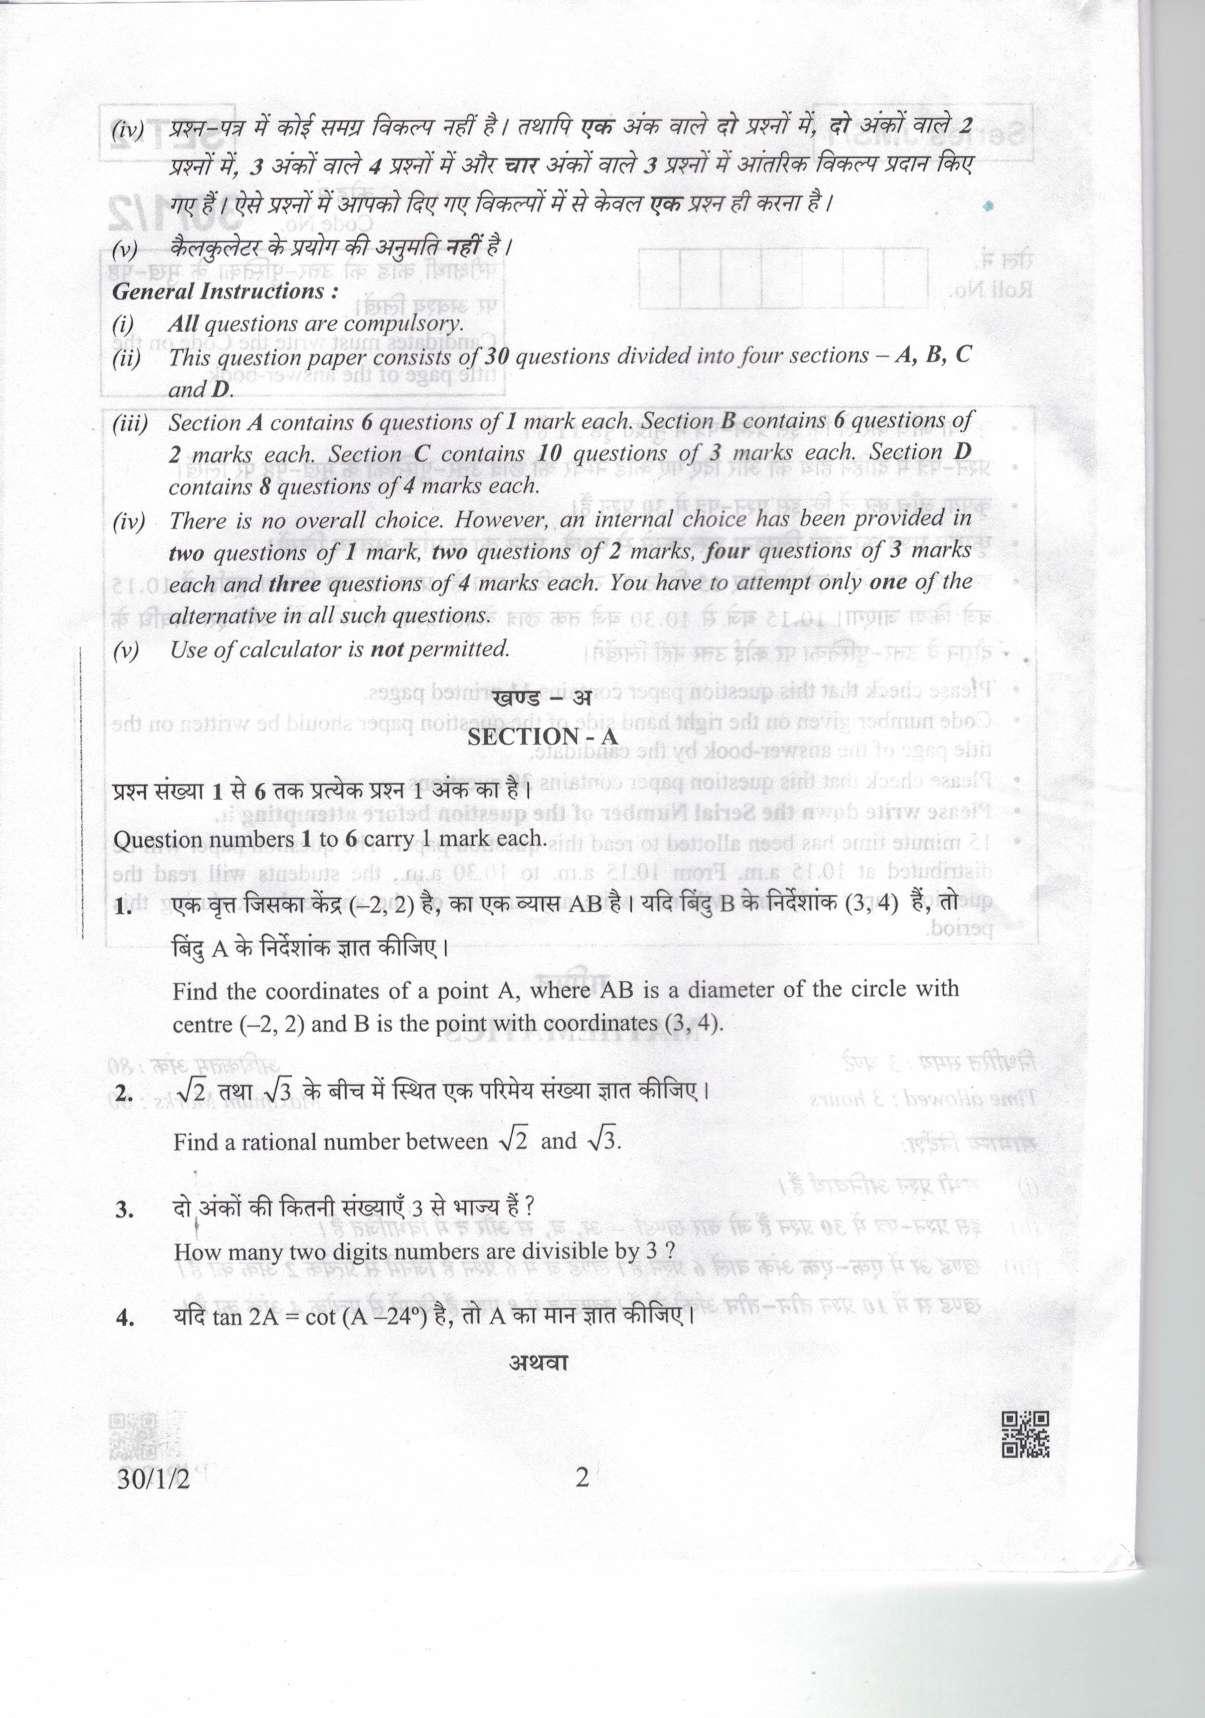 CBSE Class 10 Maths (30/1/2 - SET 2) 2019 Question Paper - Page 2